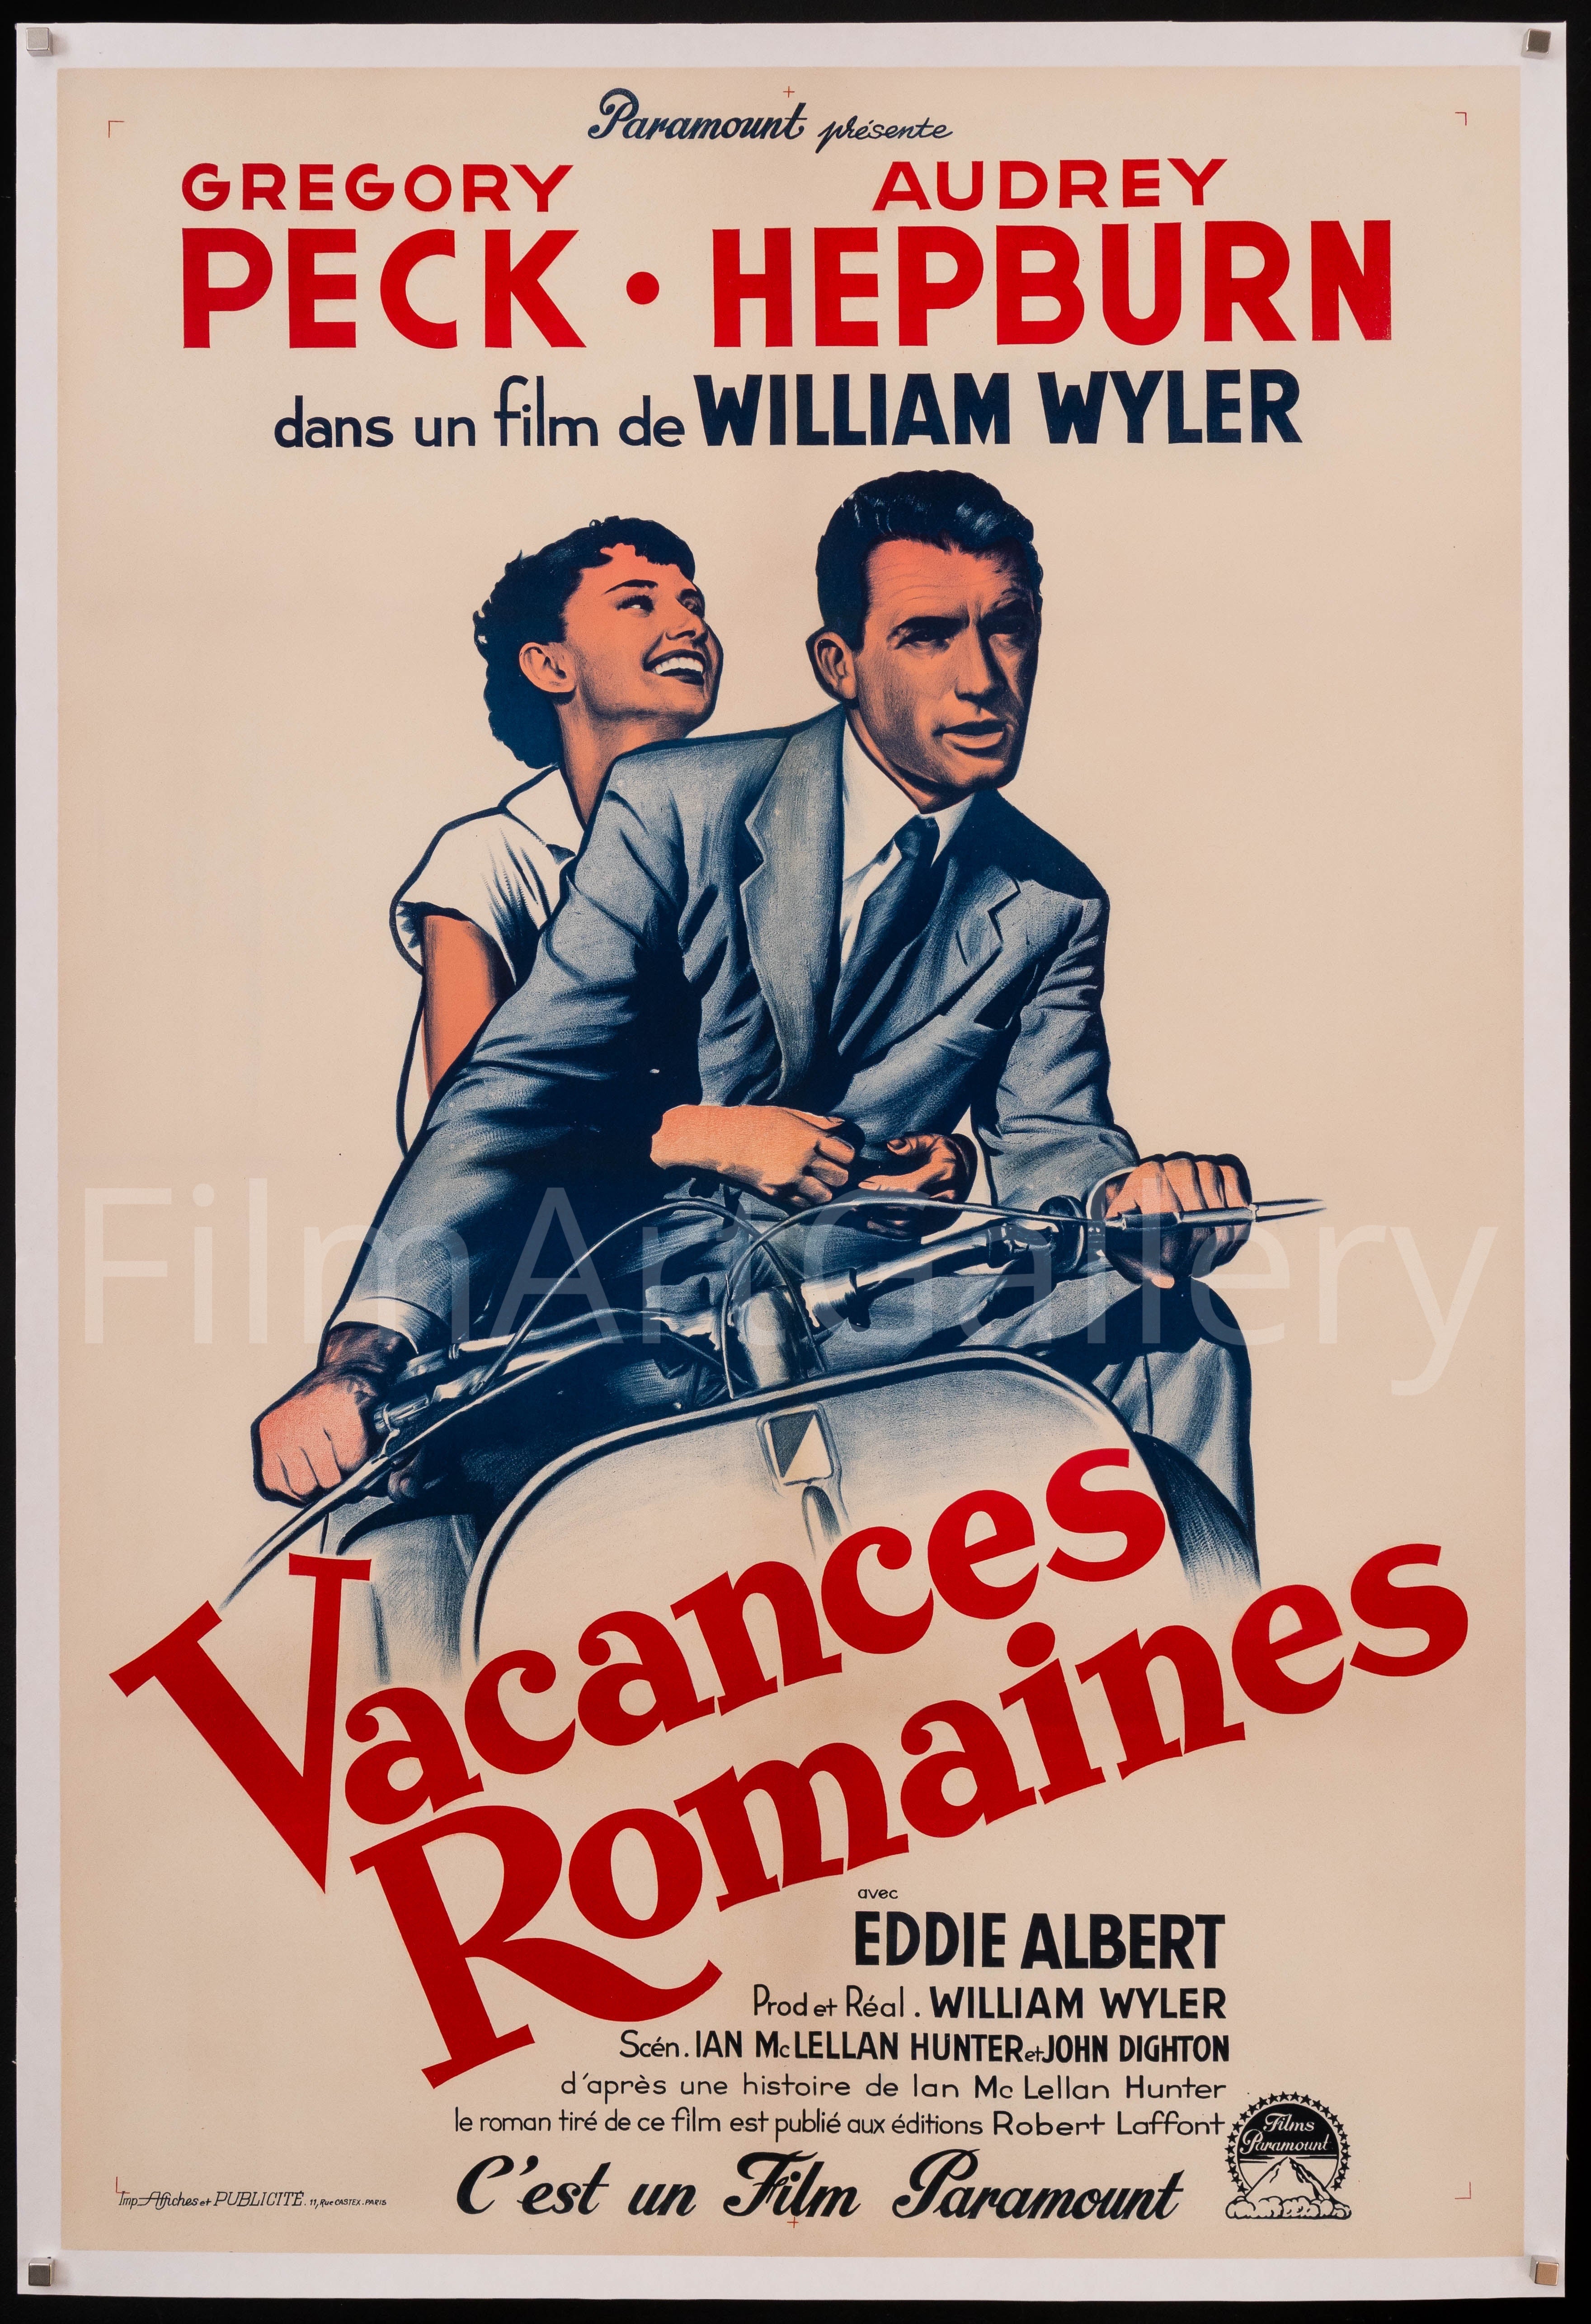 Roman Holiday Movie Poster 1960's RI French Medium (31x47)